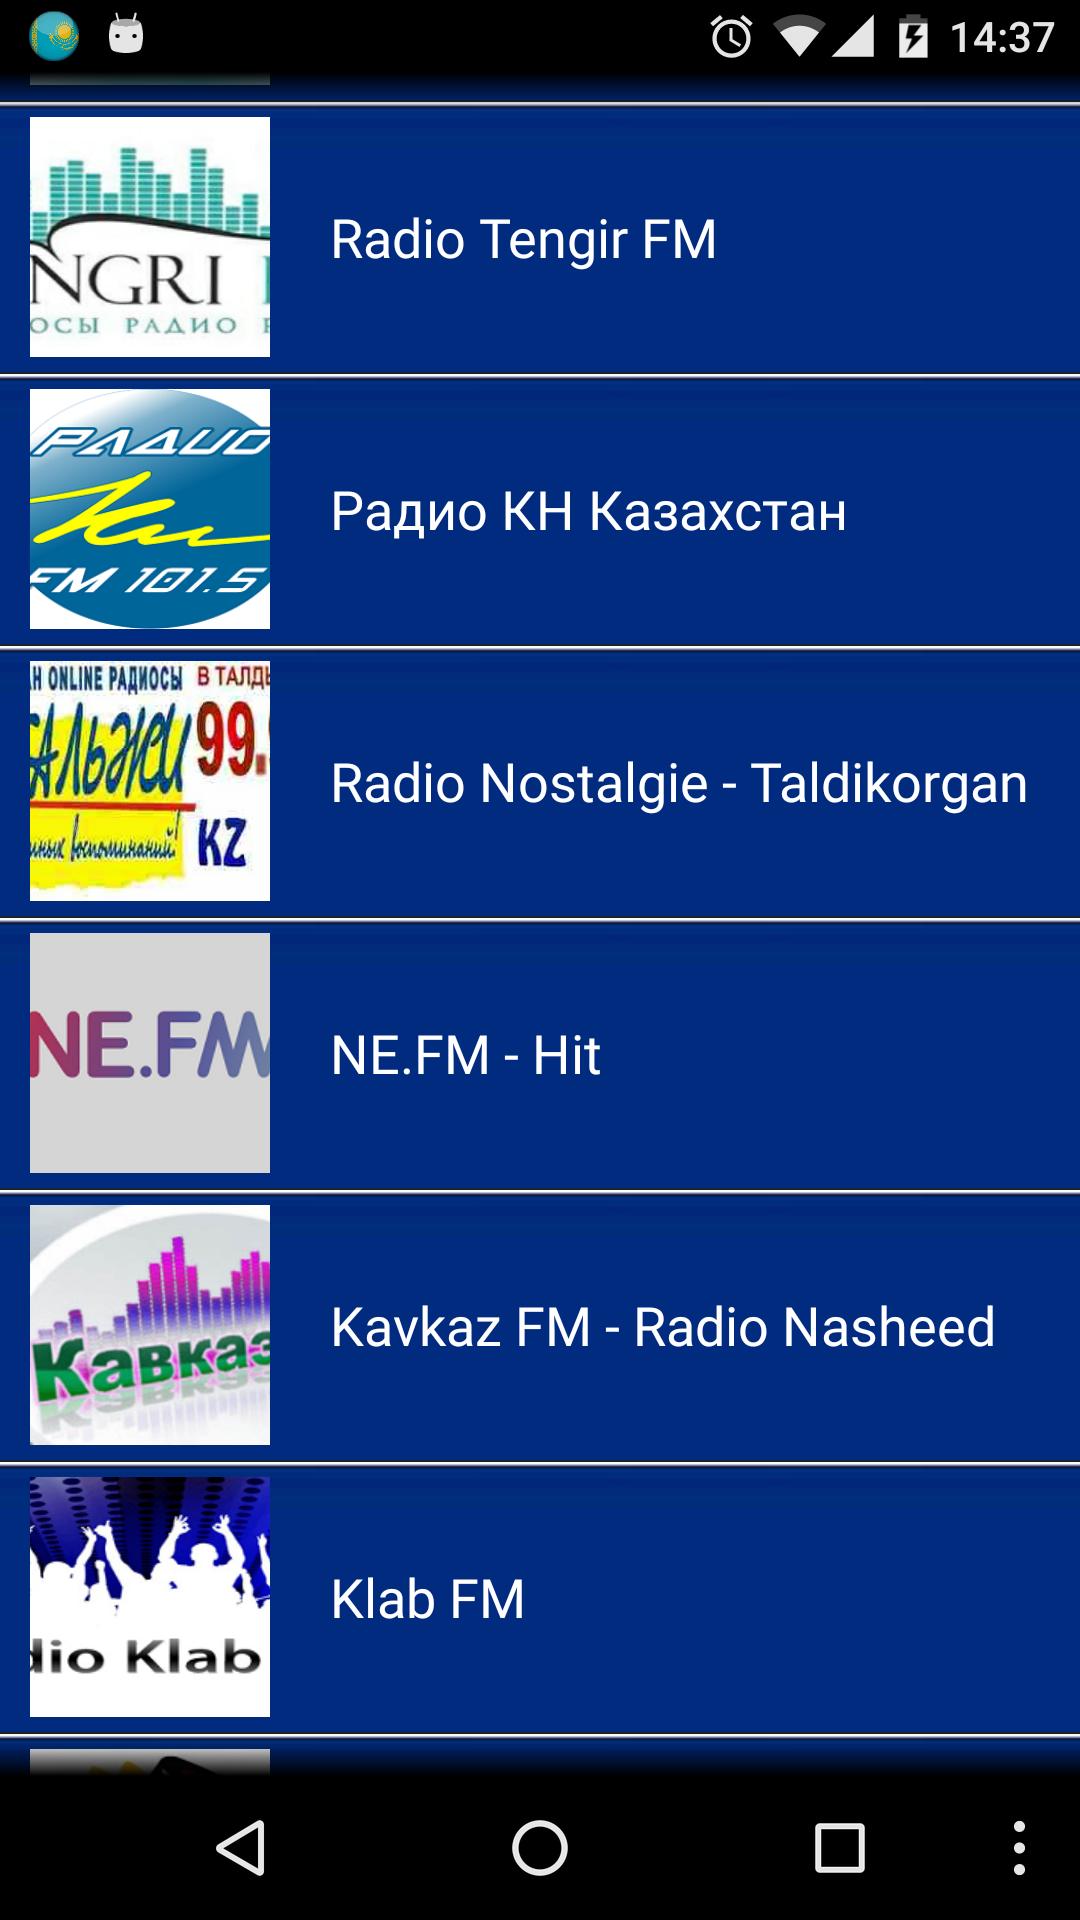 Включи казахское радио. Радио Казахстан. Казахская радиостанция. Казахское радиостанции список. Какие радио в Казахстане.